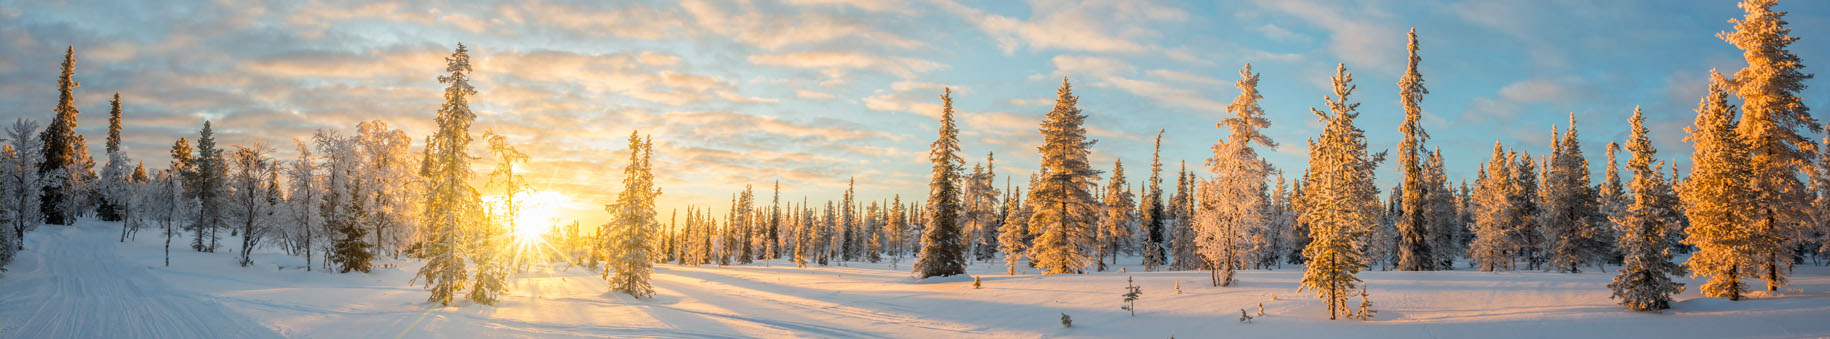 Winterbescherming bomen - winterhoezen en warmtelinten - vorst bomen